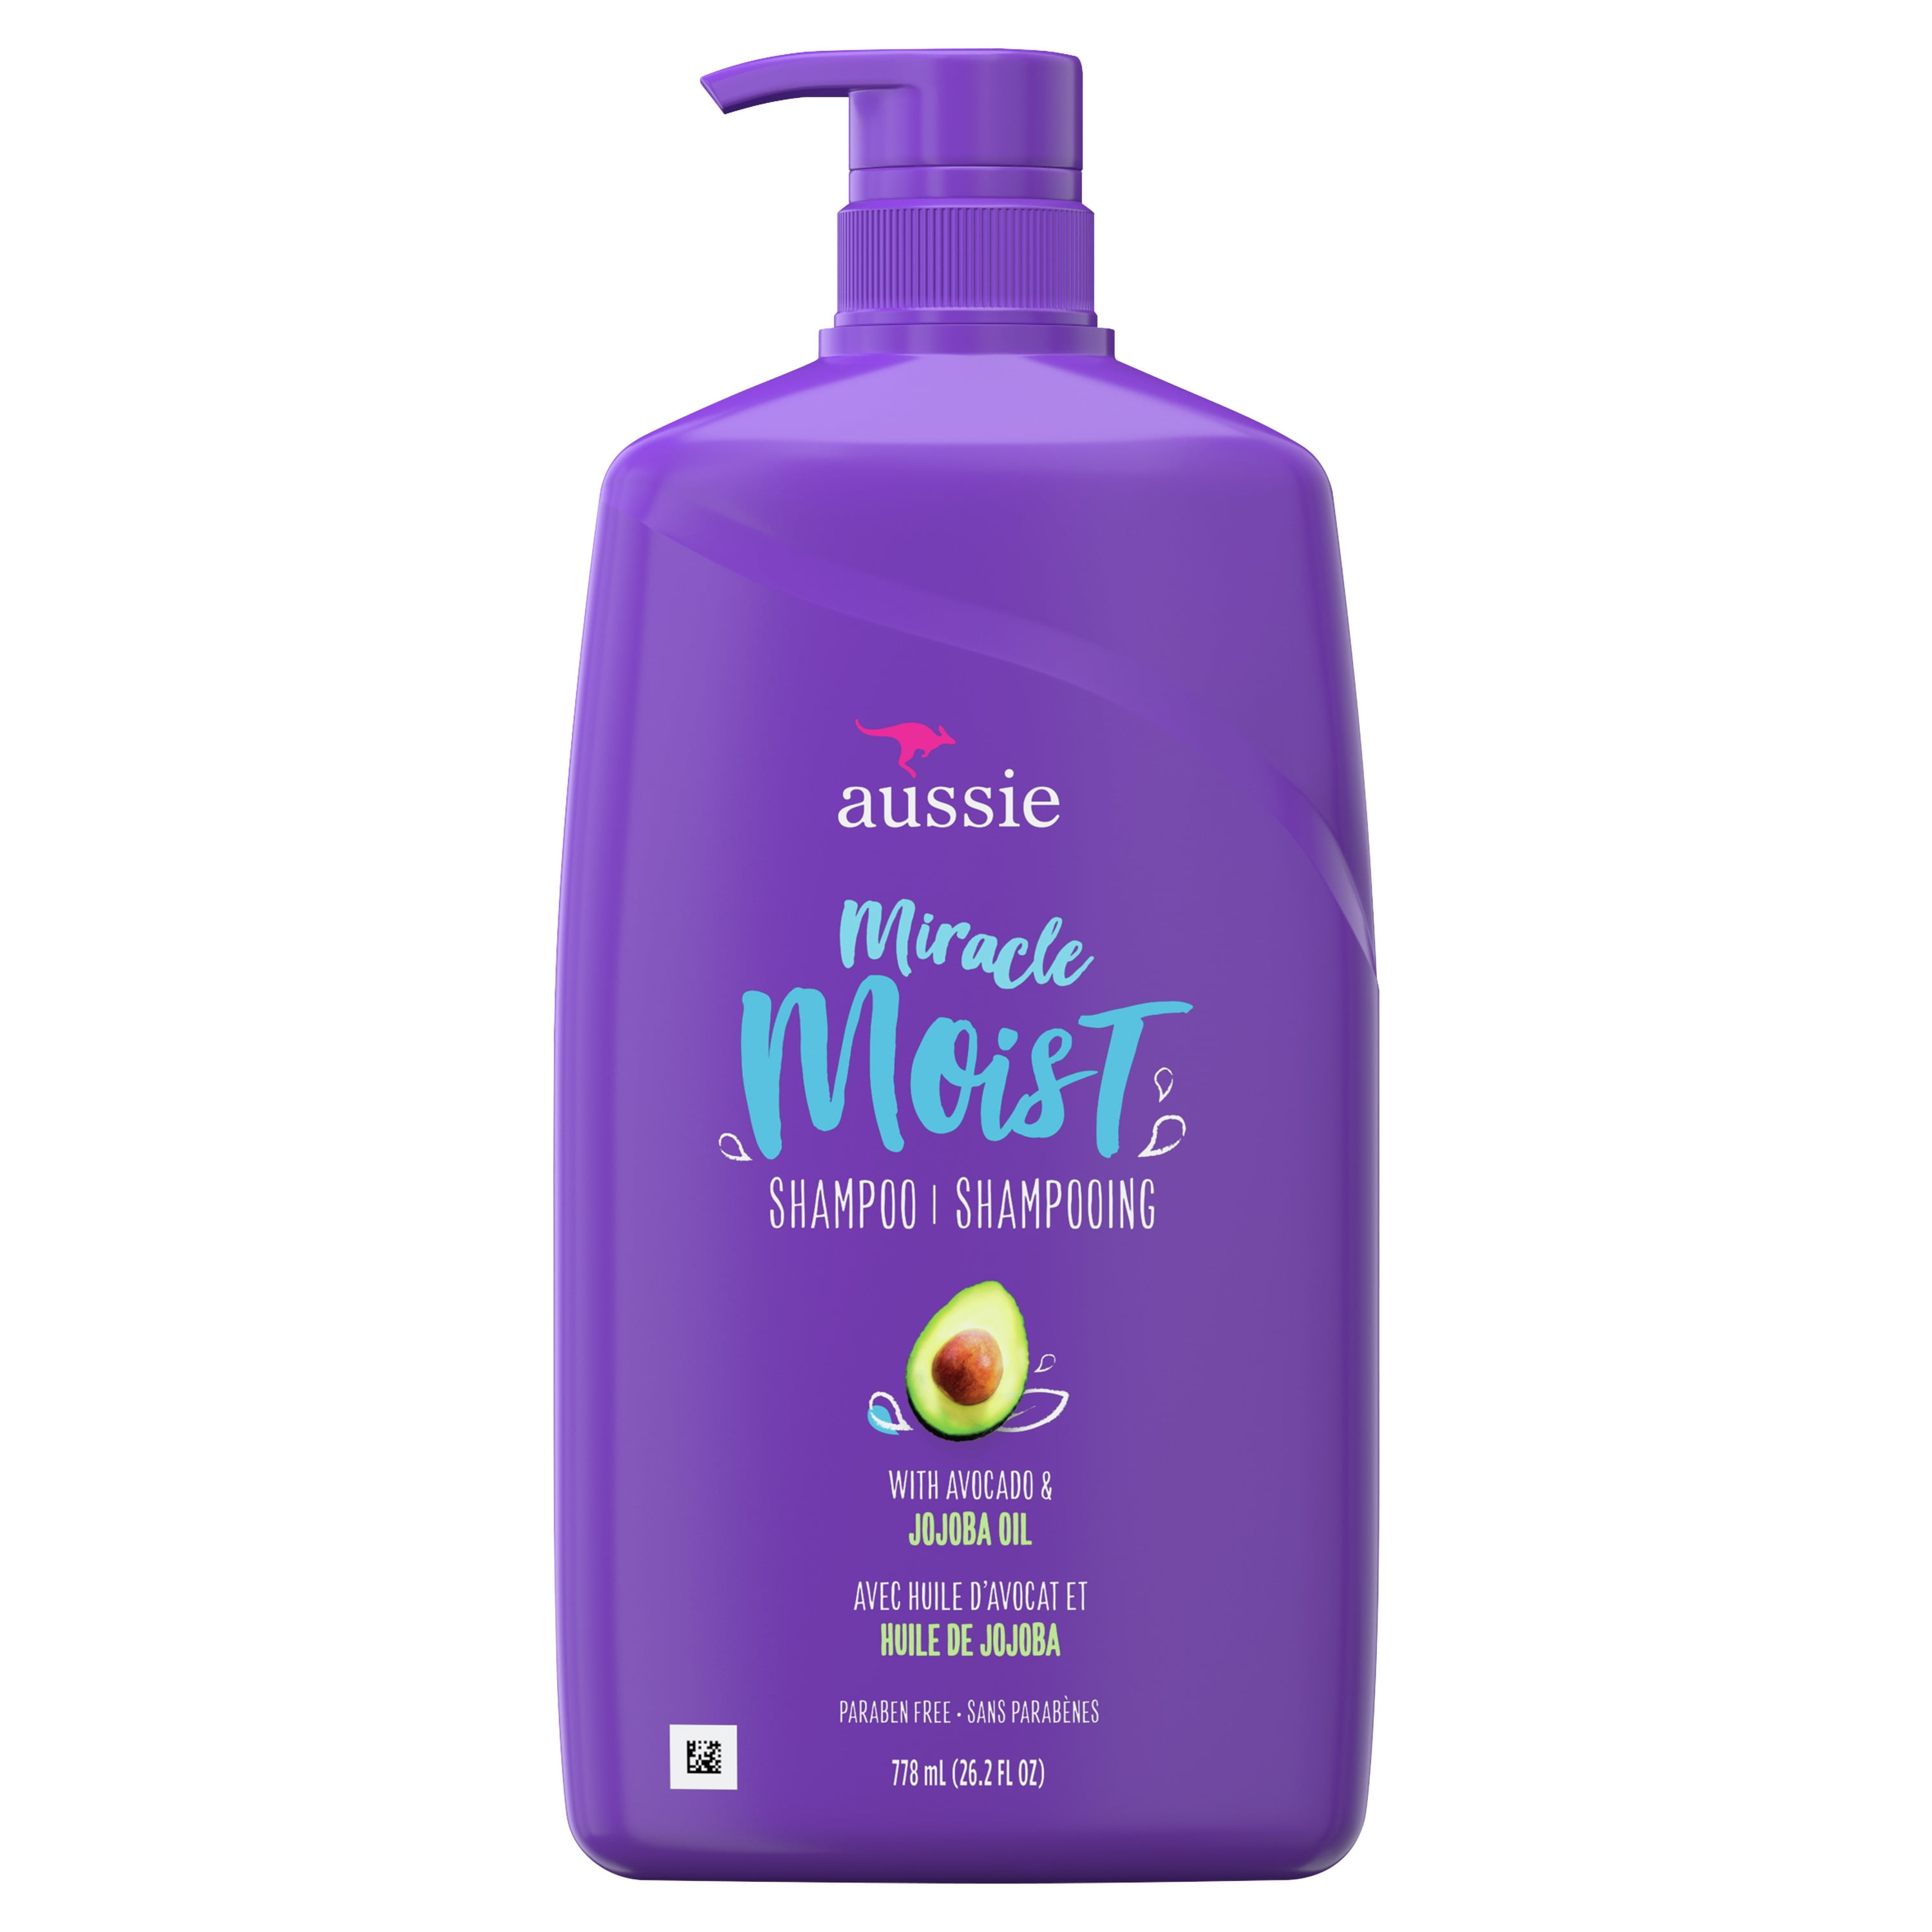 opretholde Slip sko overgive Aussie Miracle Moist Shampoo with Avocado, Paraben Free, For All Hair Types  26.2 fl oz - Walmart.com